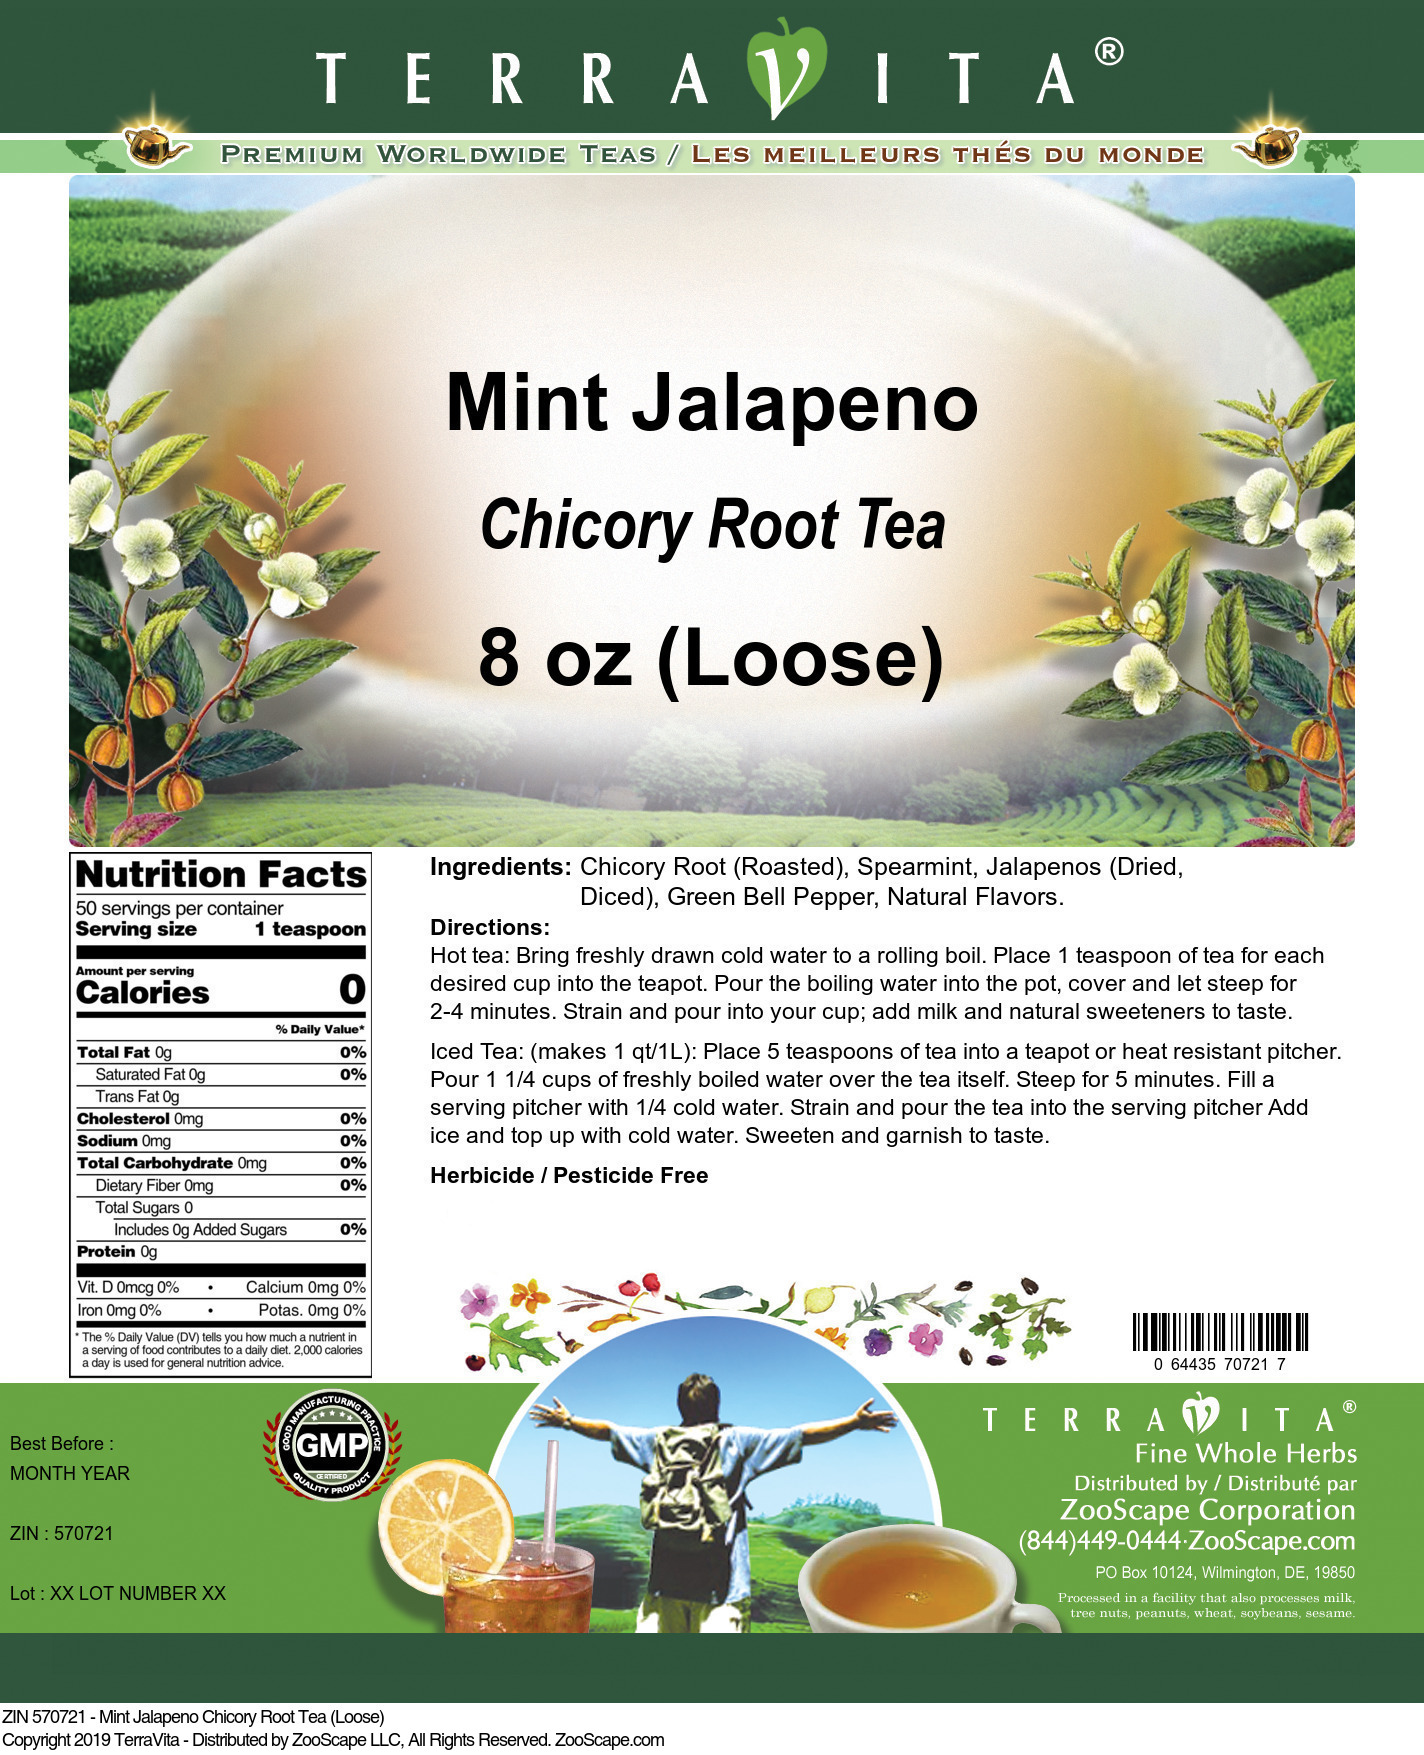 Mint Jalapeno Chicory Root Tea (Loose) - Label